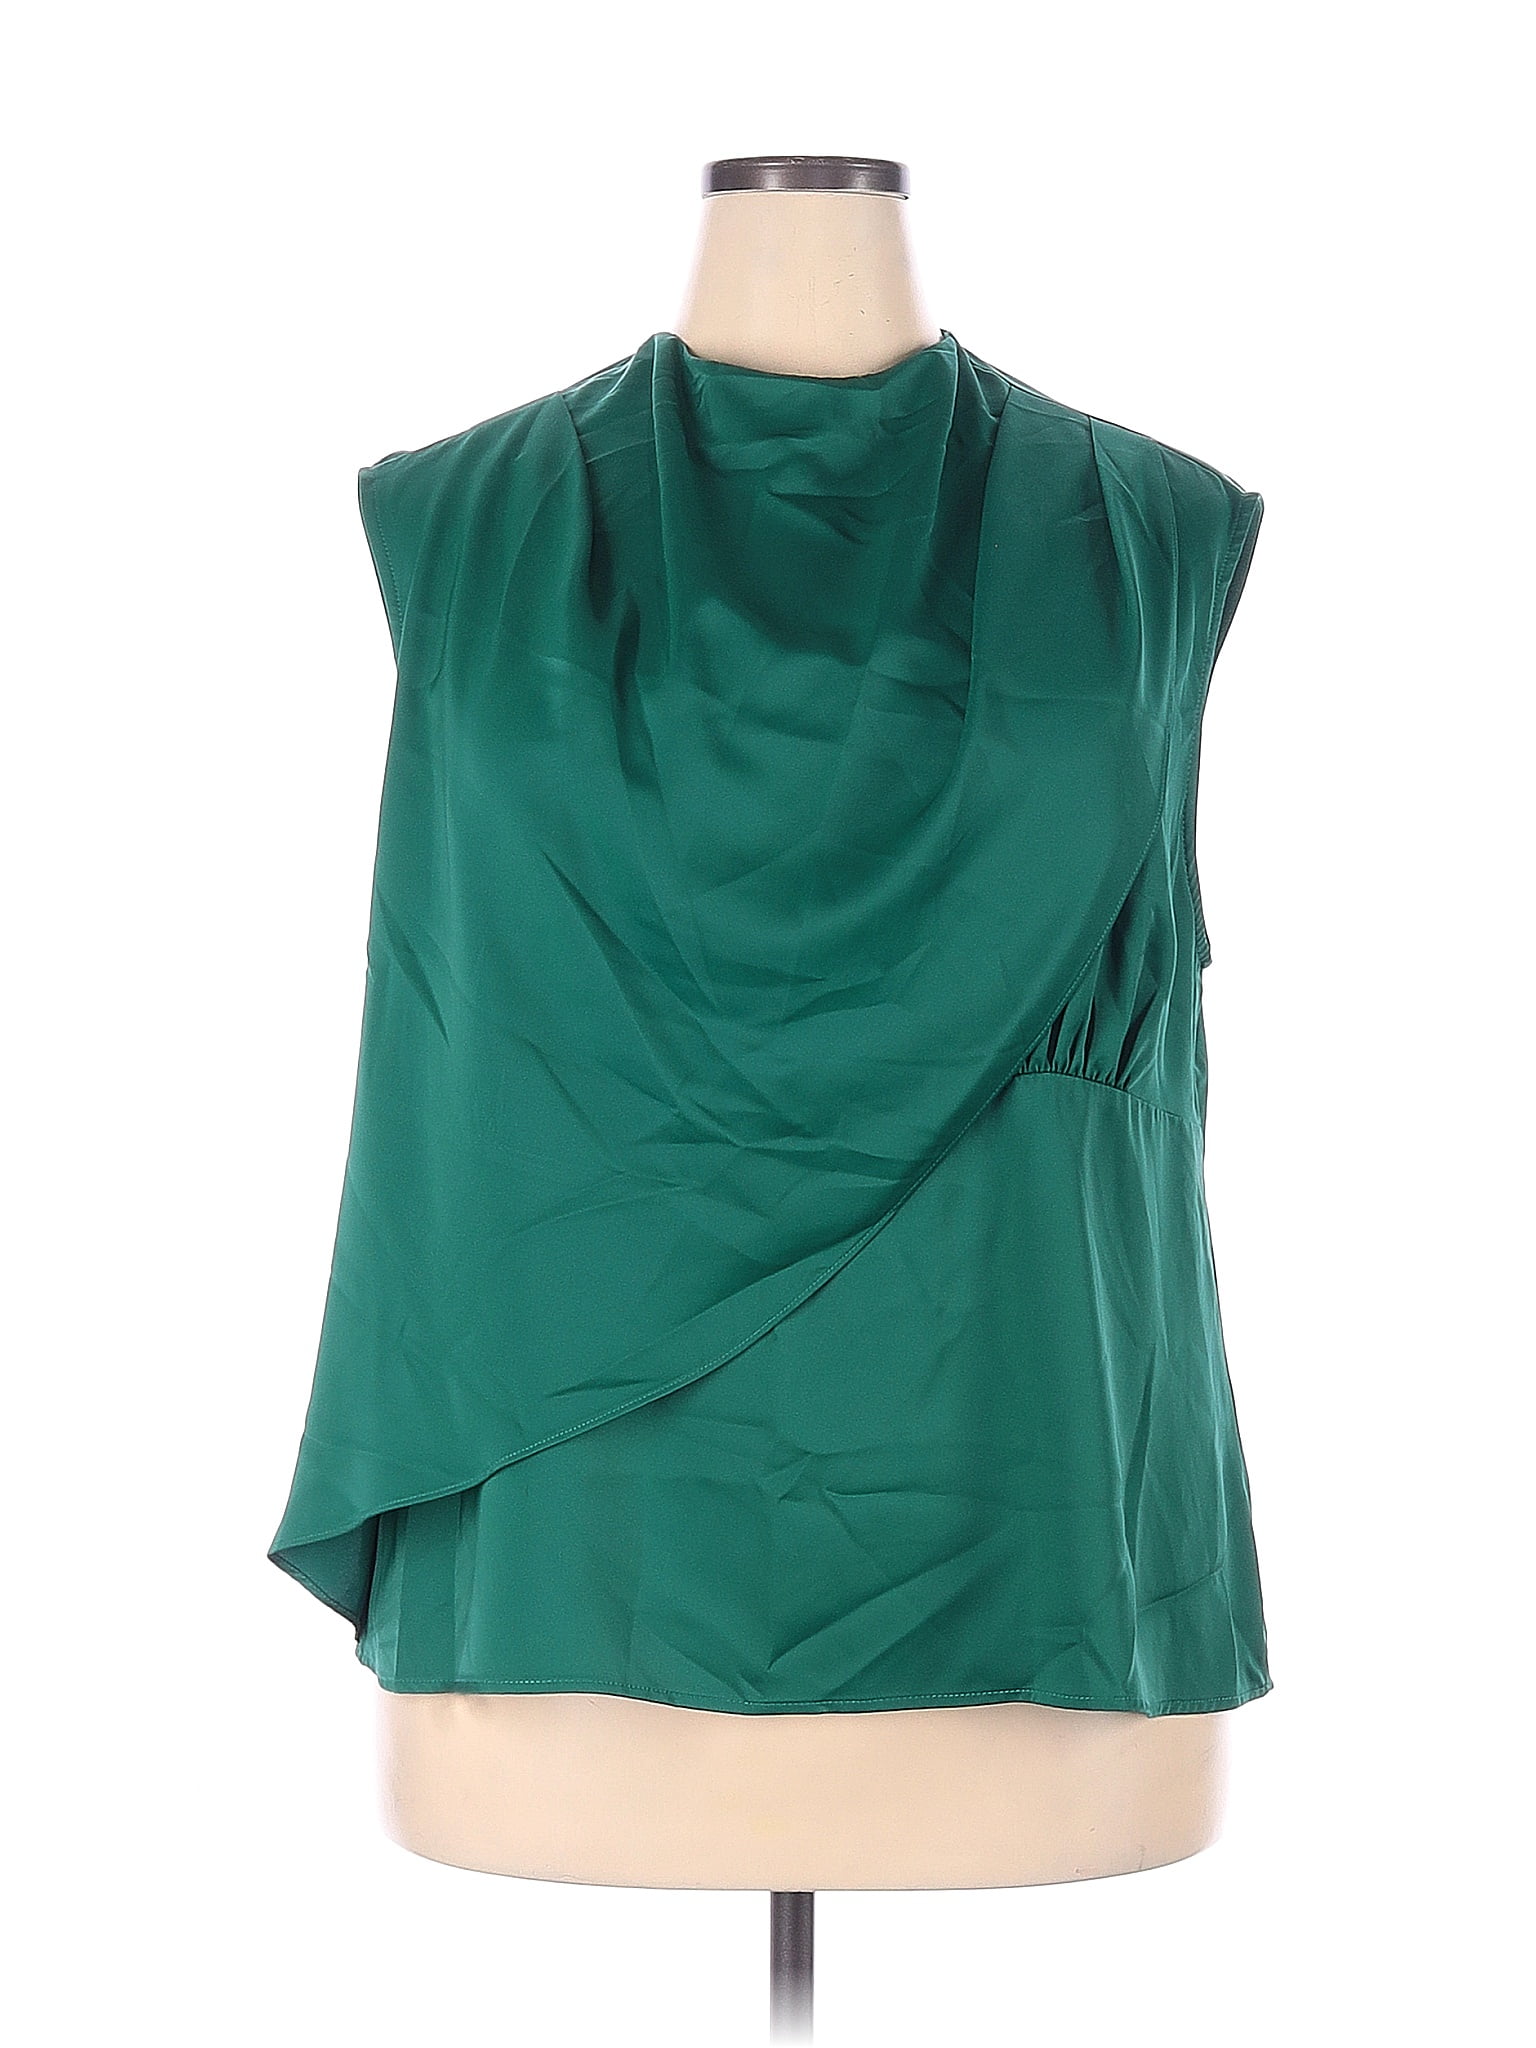 MOTF Green Short Sleeve Blouse Size 4X (Plus) - 65% off | thredUP